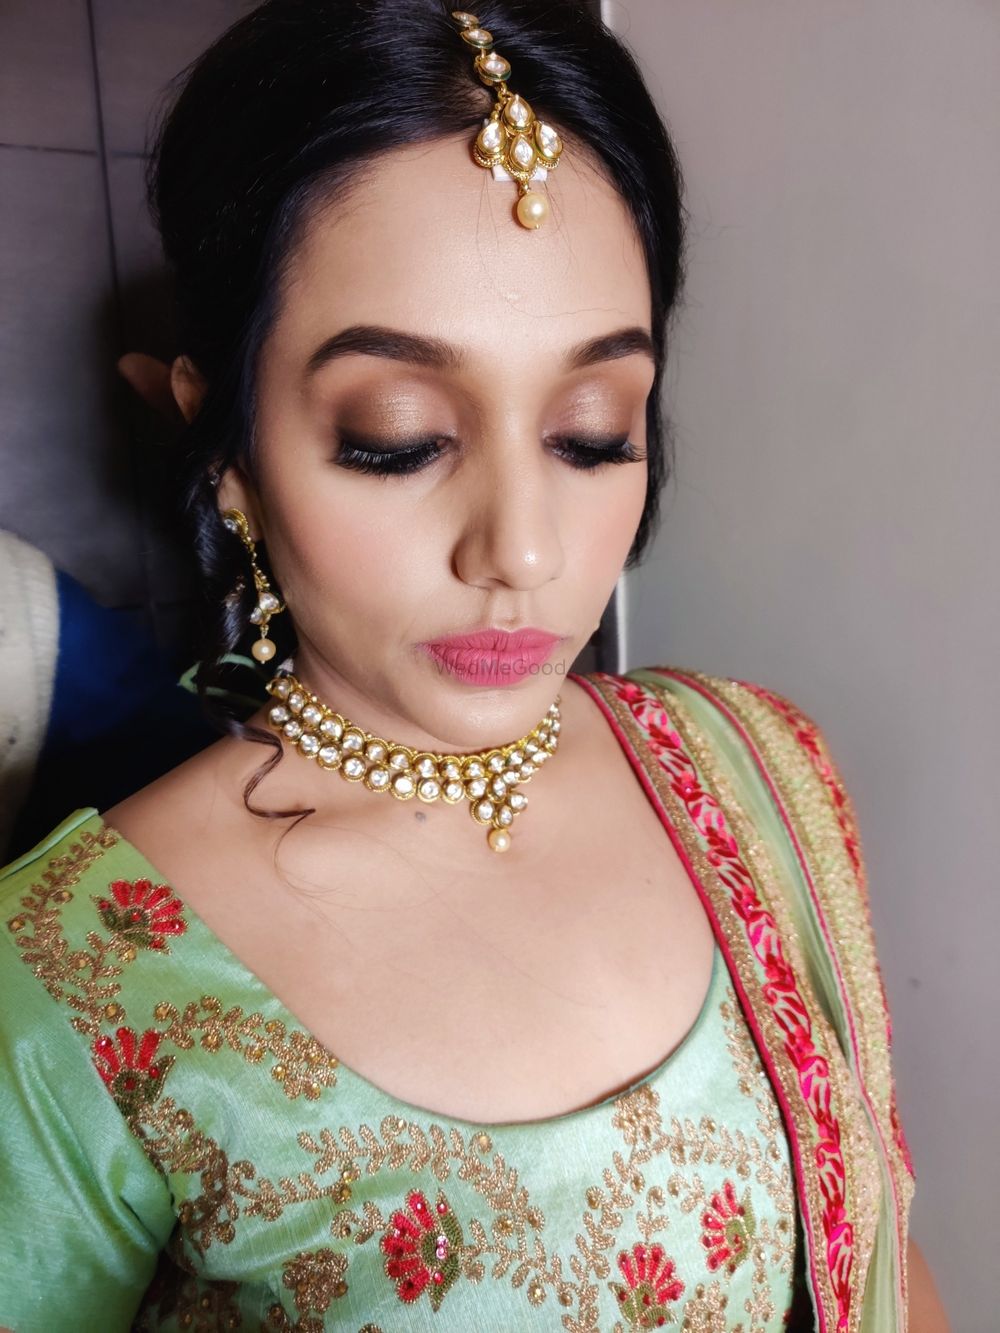 Photo By Makeup by Anibha Dhar - Bridal Makeup